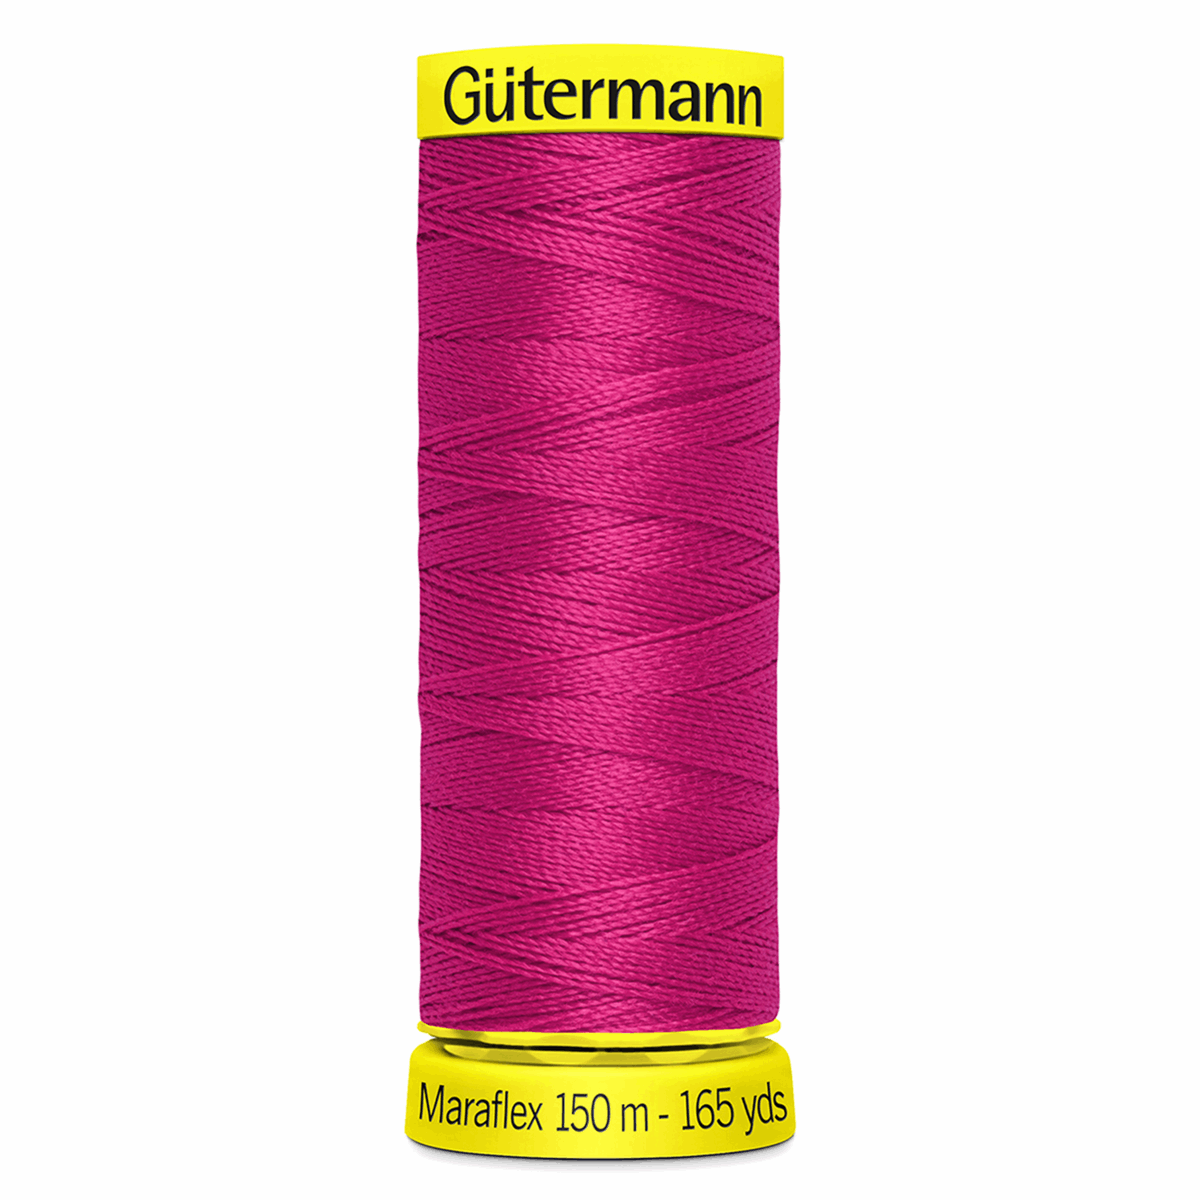 Gutermann Maraflex Elastic Sewing Thread 150m Bright Crimson 382